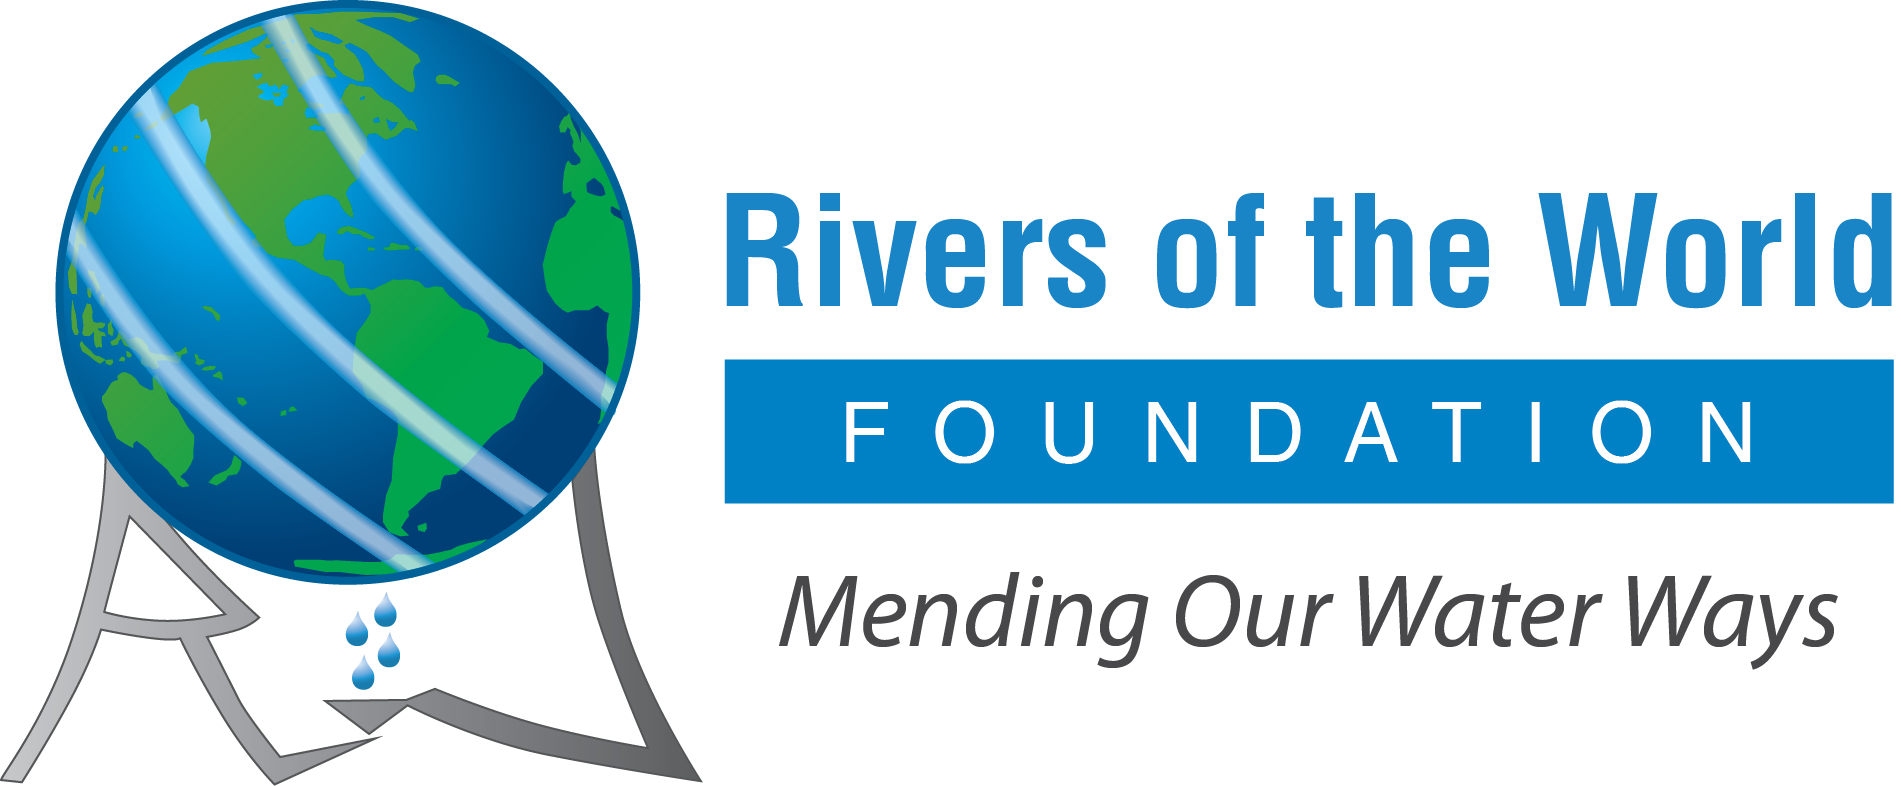 row foundation logo